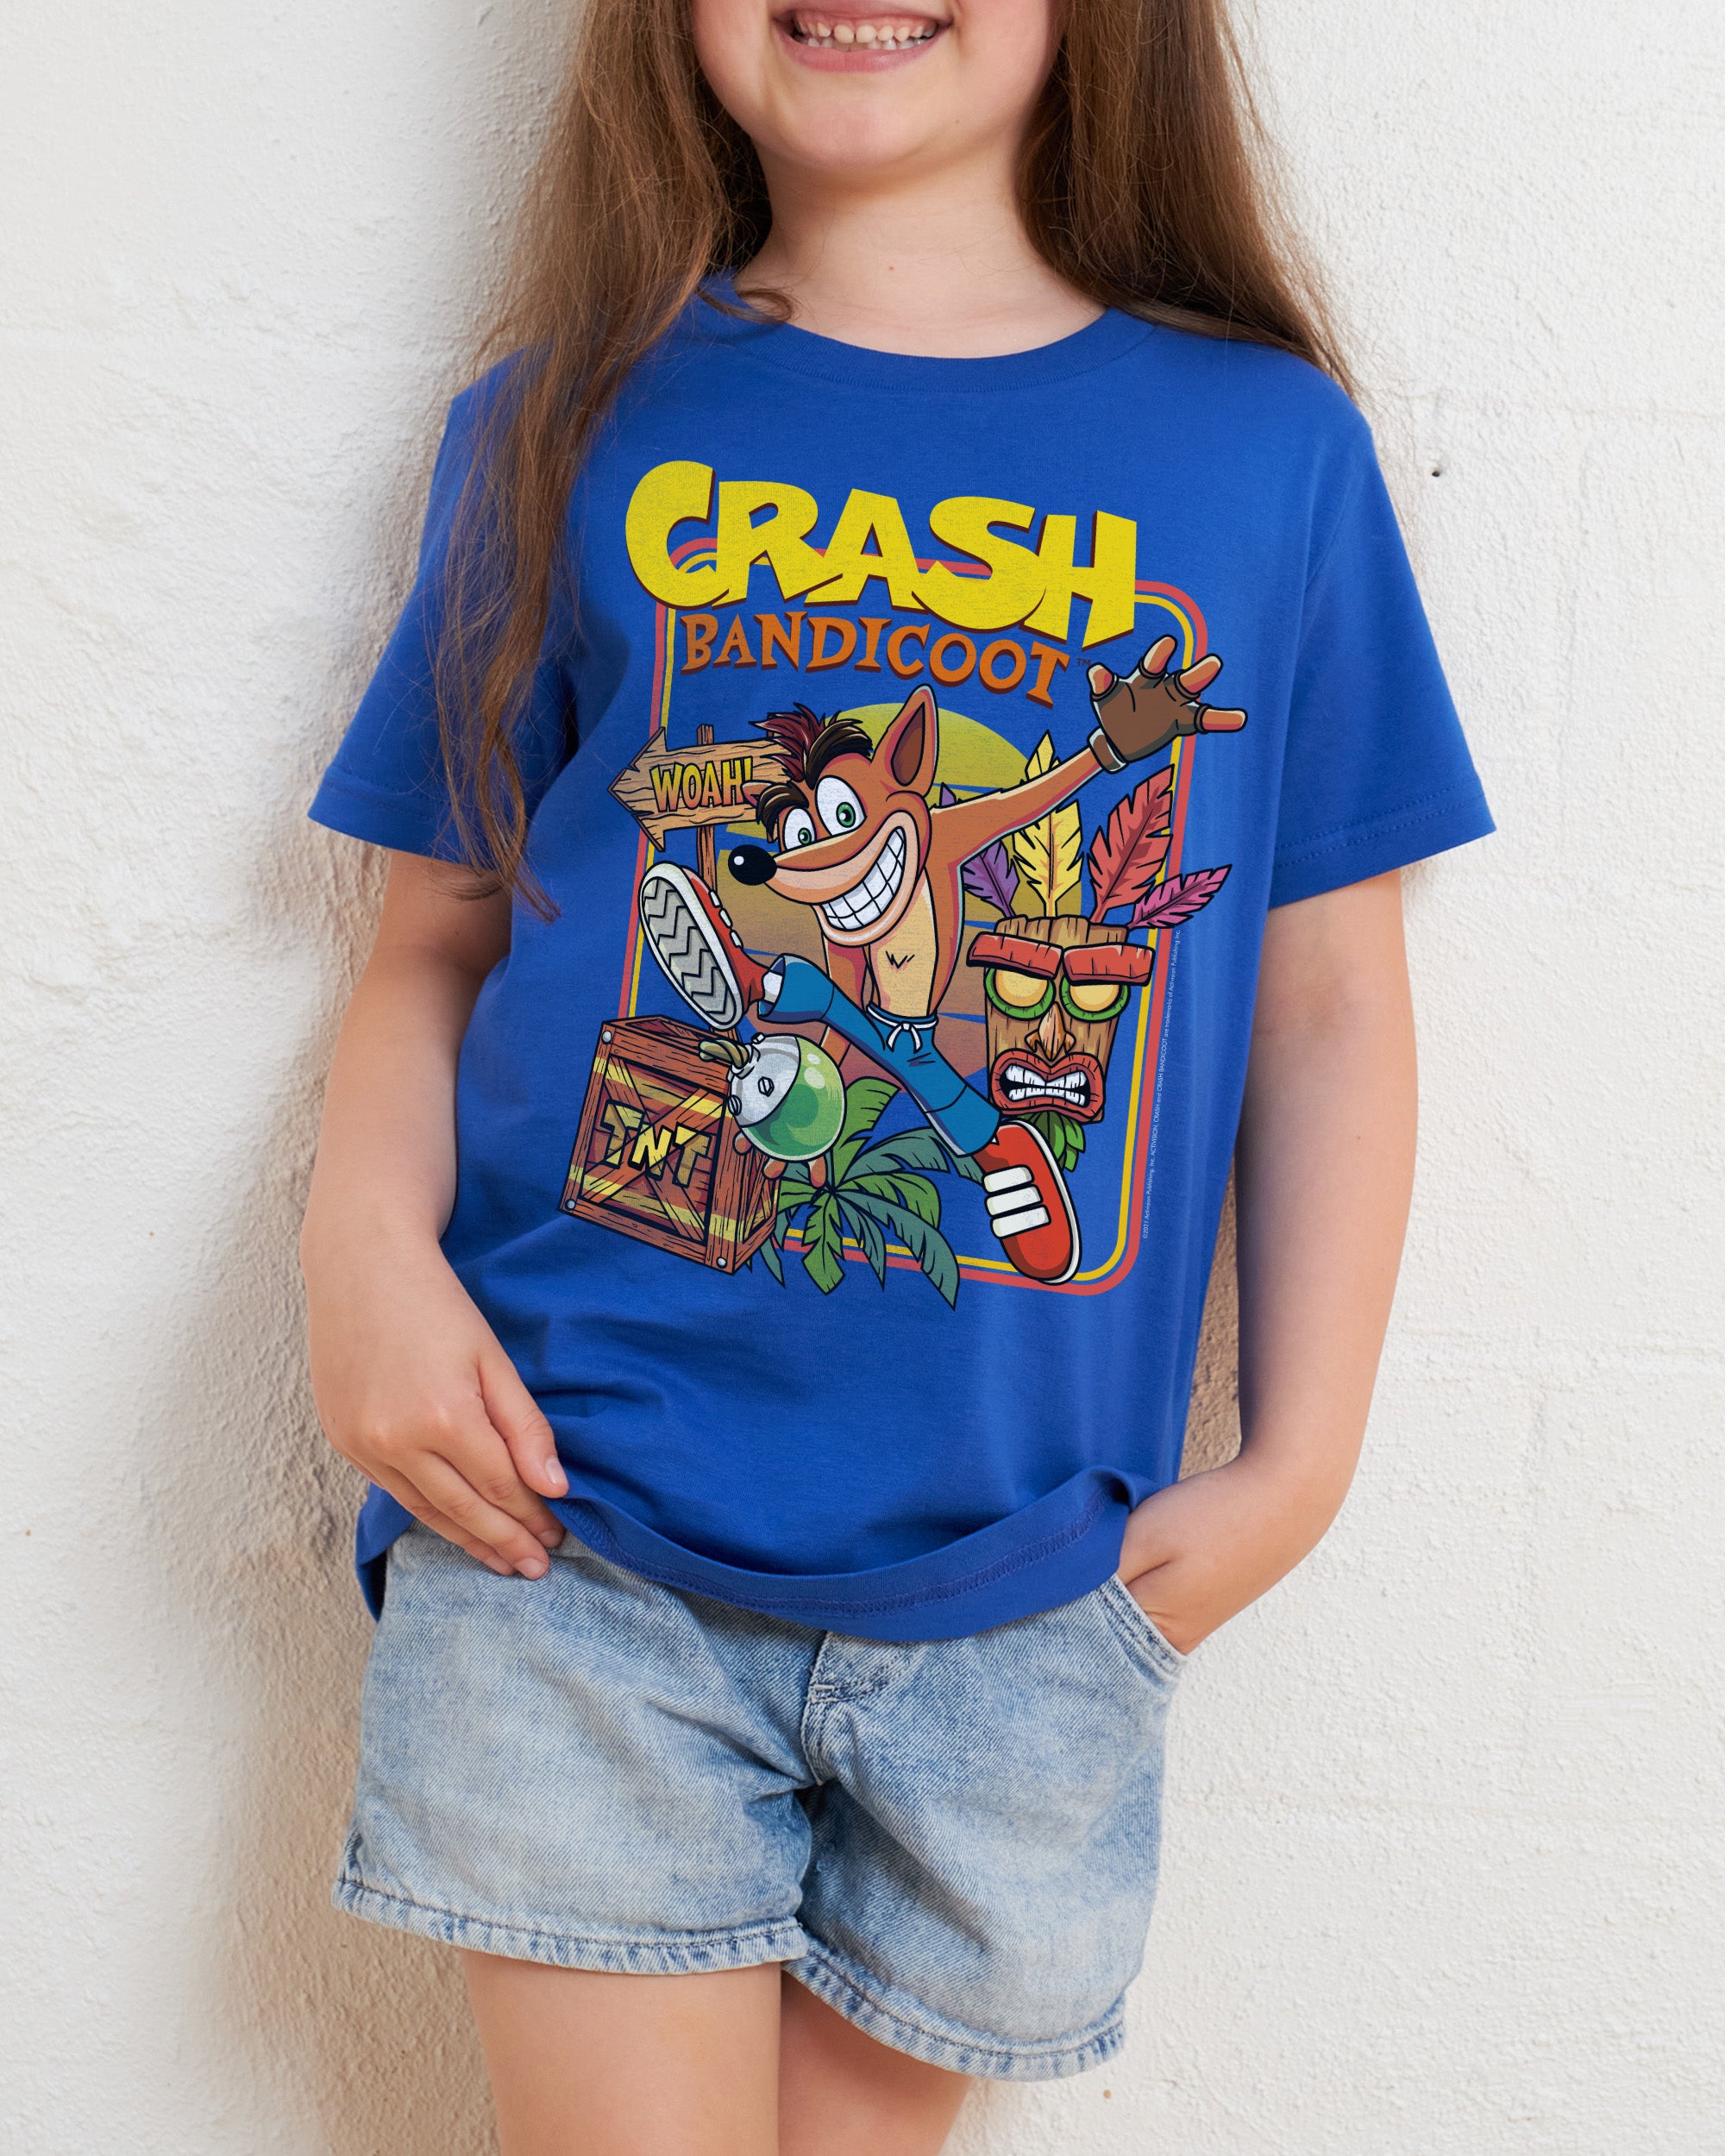 Whoa Crash! Kids T-Shirt